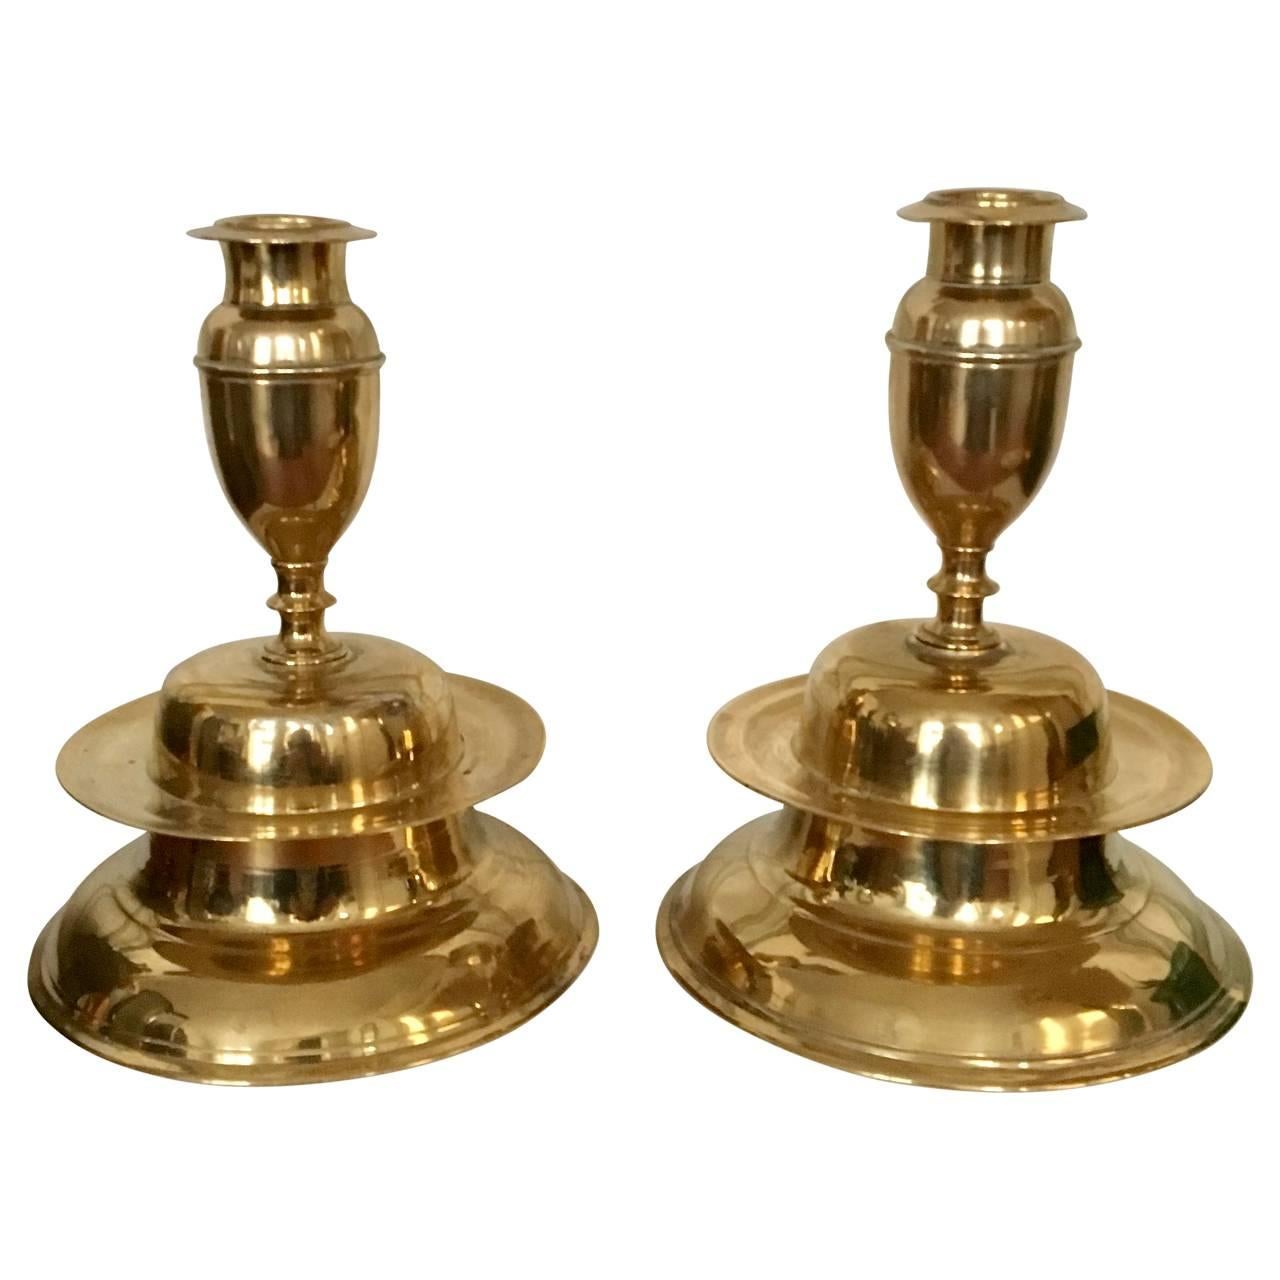 Beautiful pair of brass bell candleholders.